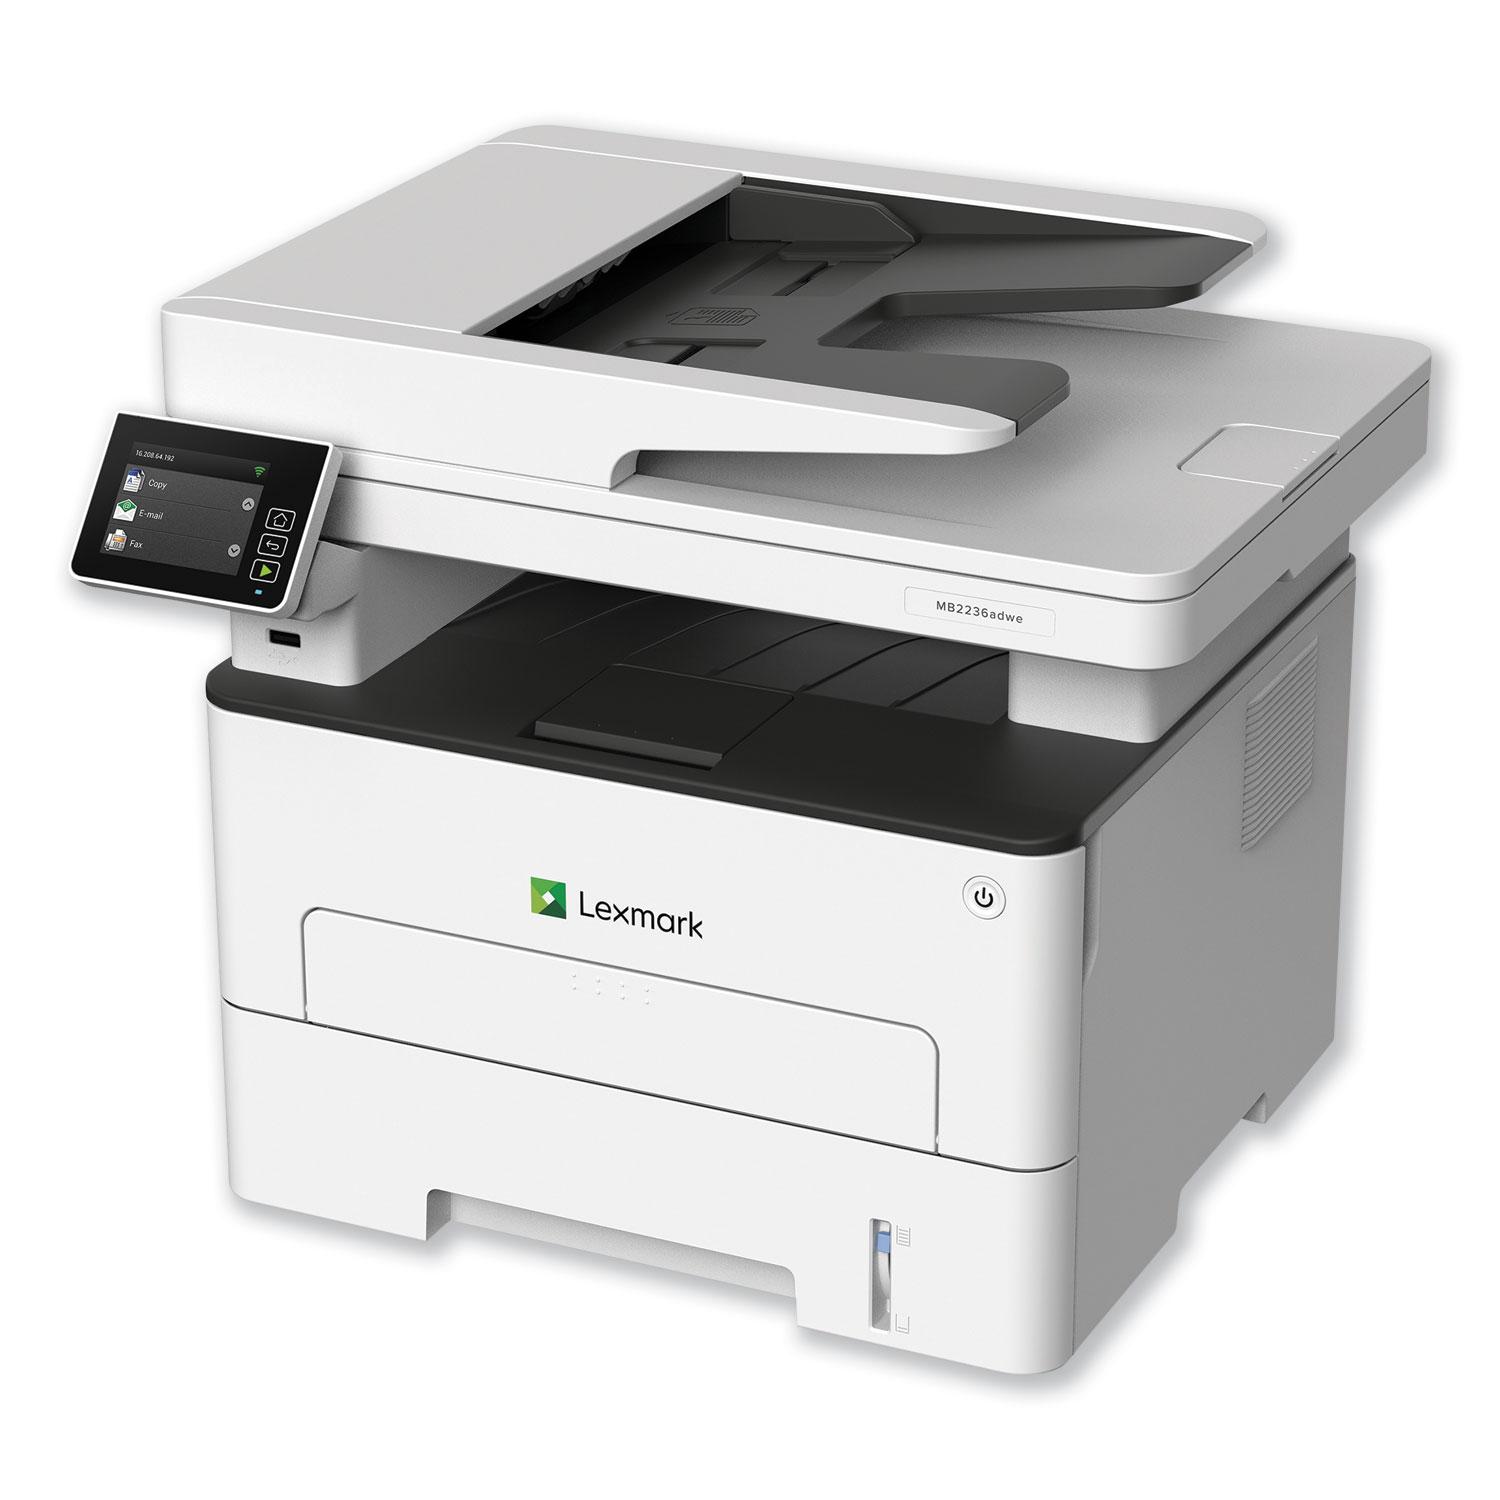  Lexmark 18M0700 MB2236adwe Multifunction Printer, Copy/Fax/Print/Scan (LEX18M0700) 